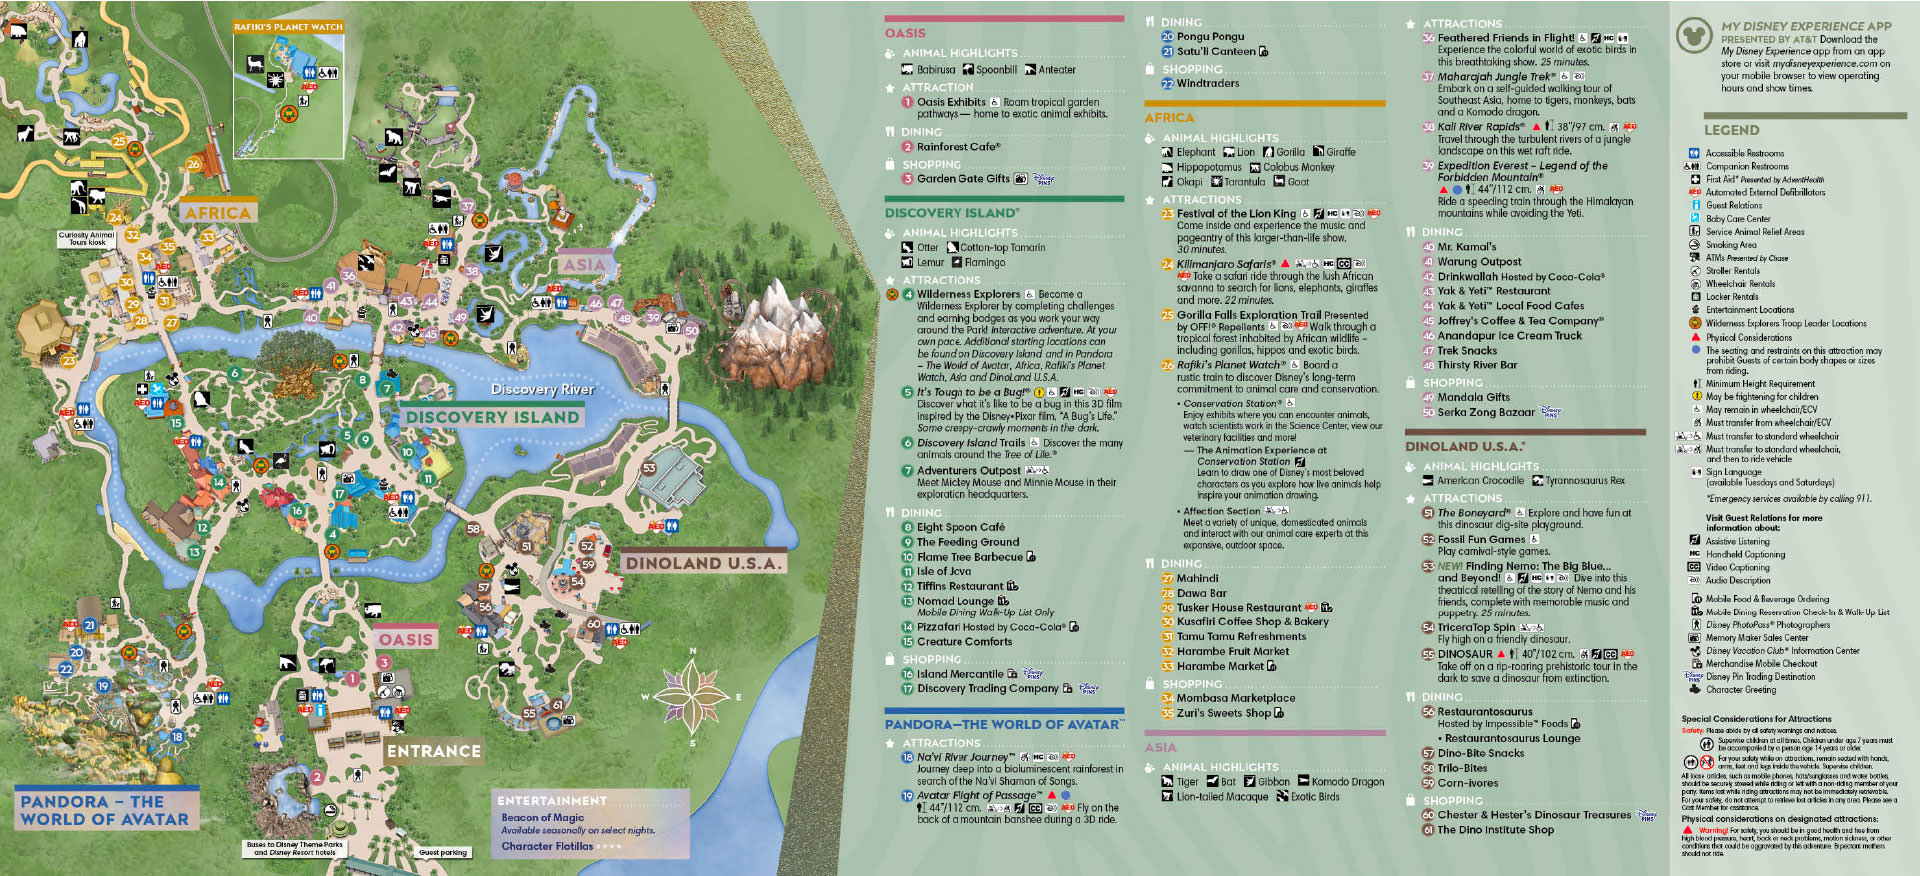 Plan de Animal Kingdom à Walt Disney World